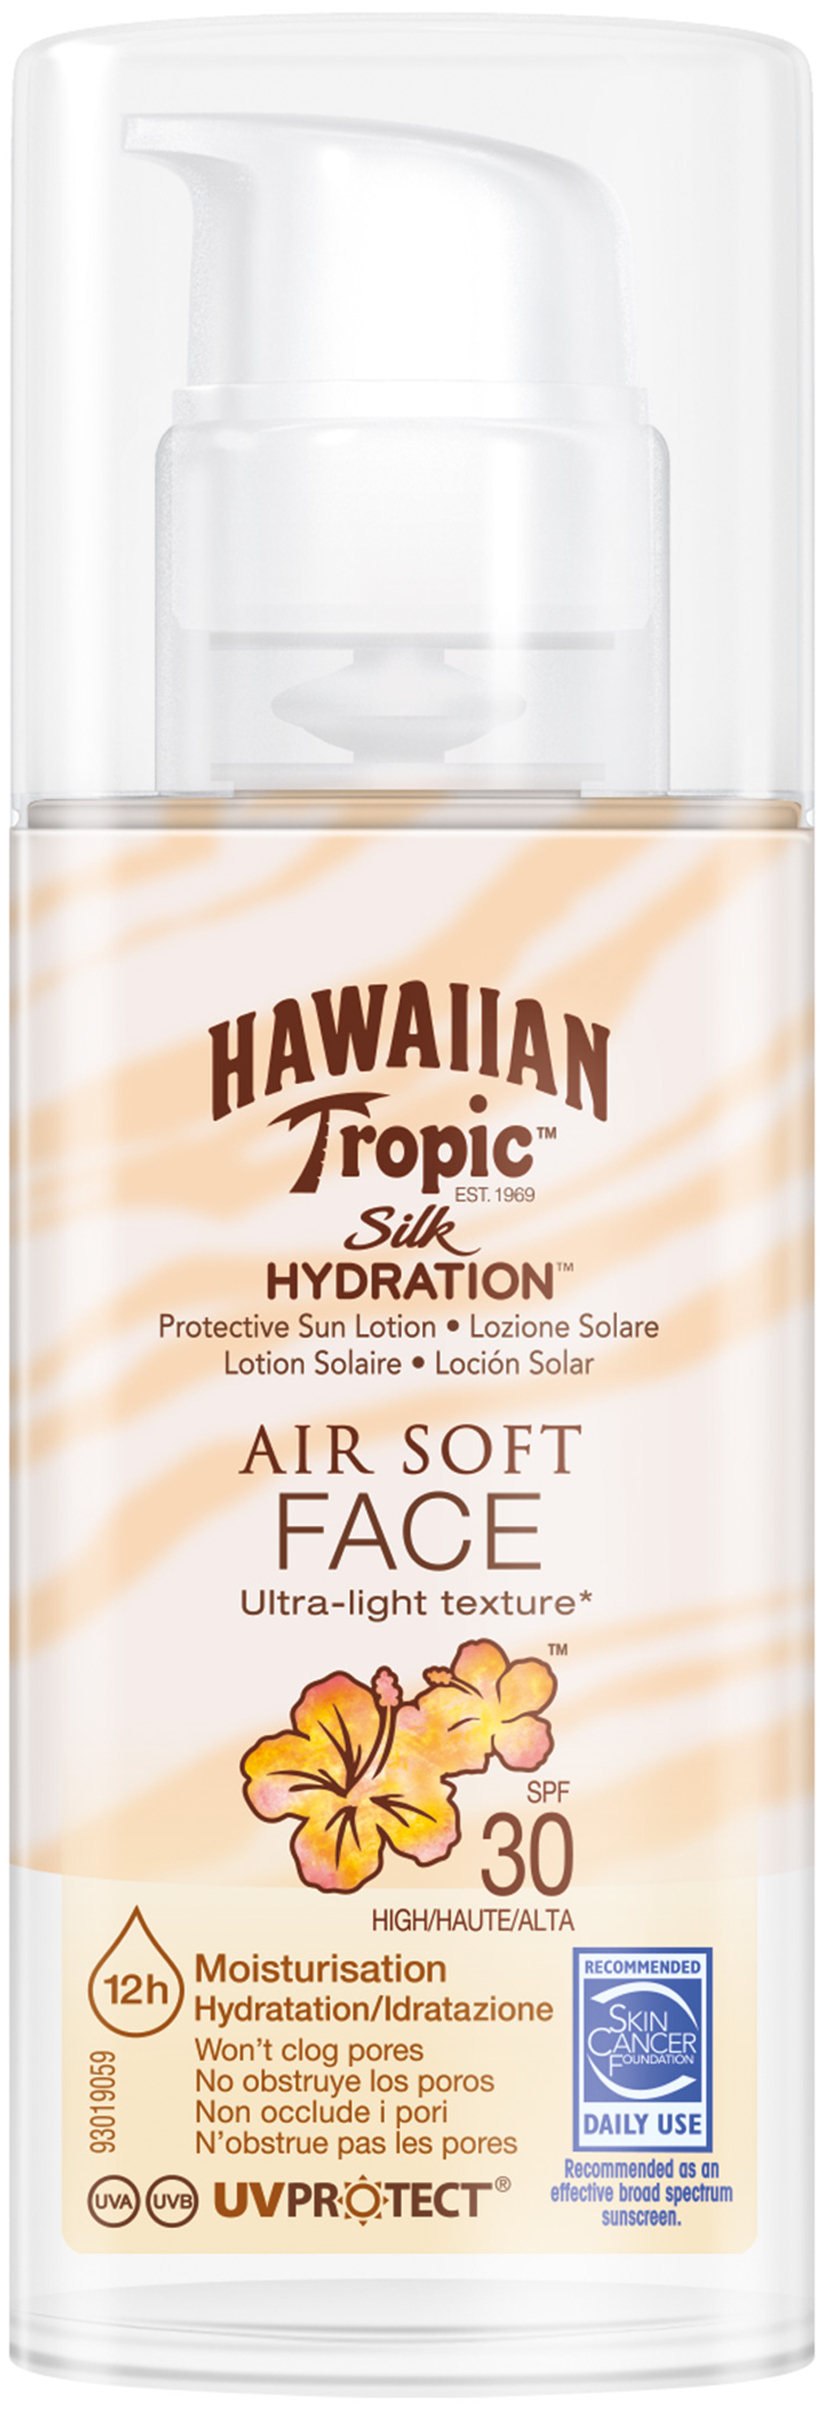 Hawaiian Tropic Silk hydration air face lotion spf 30 50 ml